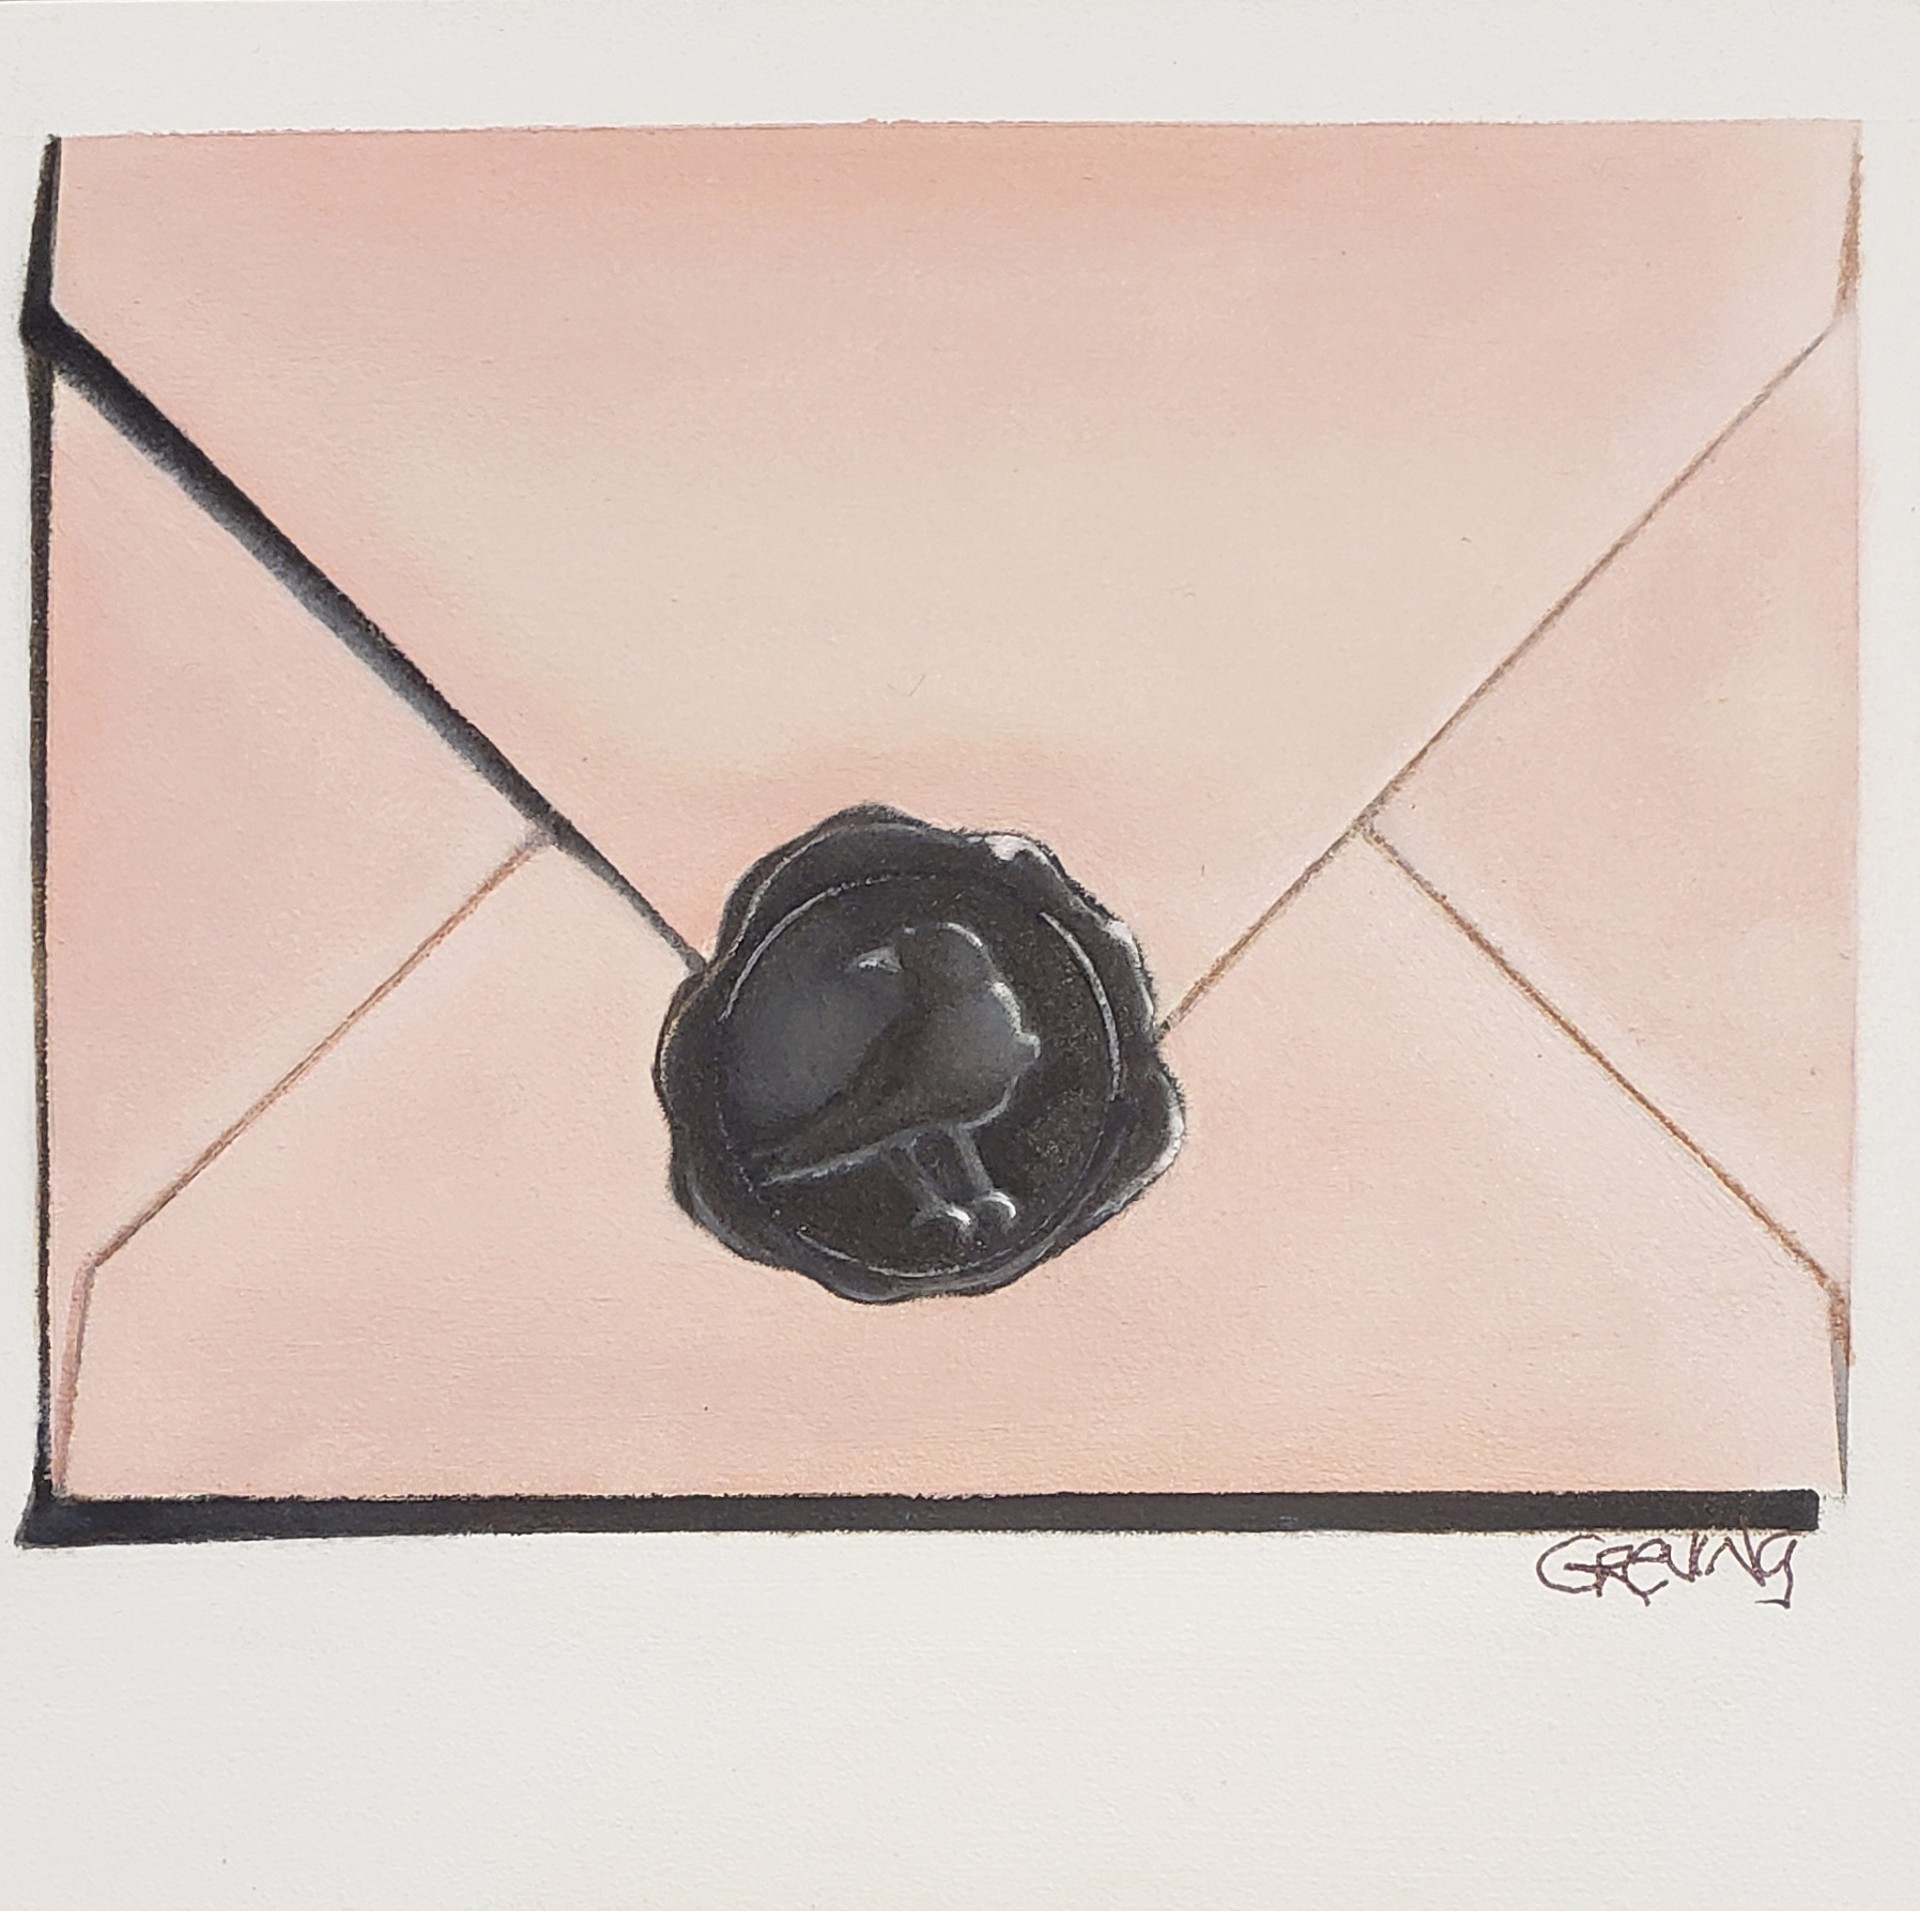 Pink Envelope with Black Crow Stamp by Barbara Greving